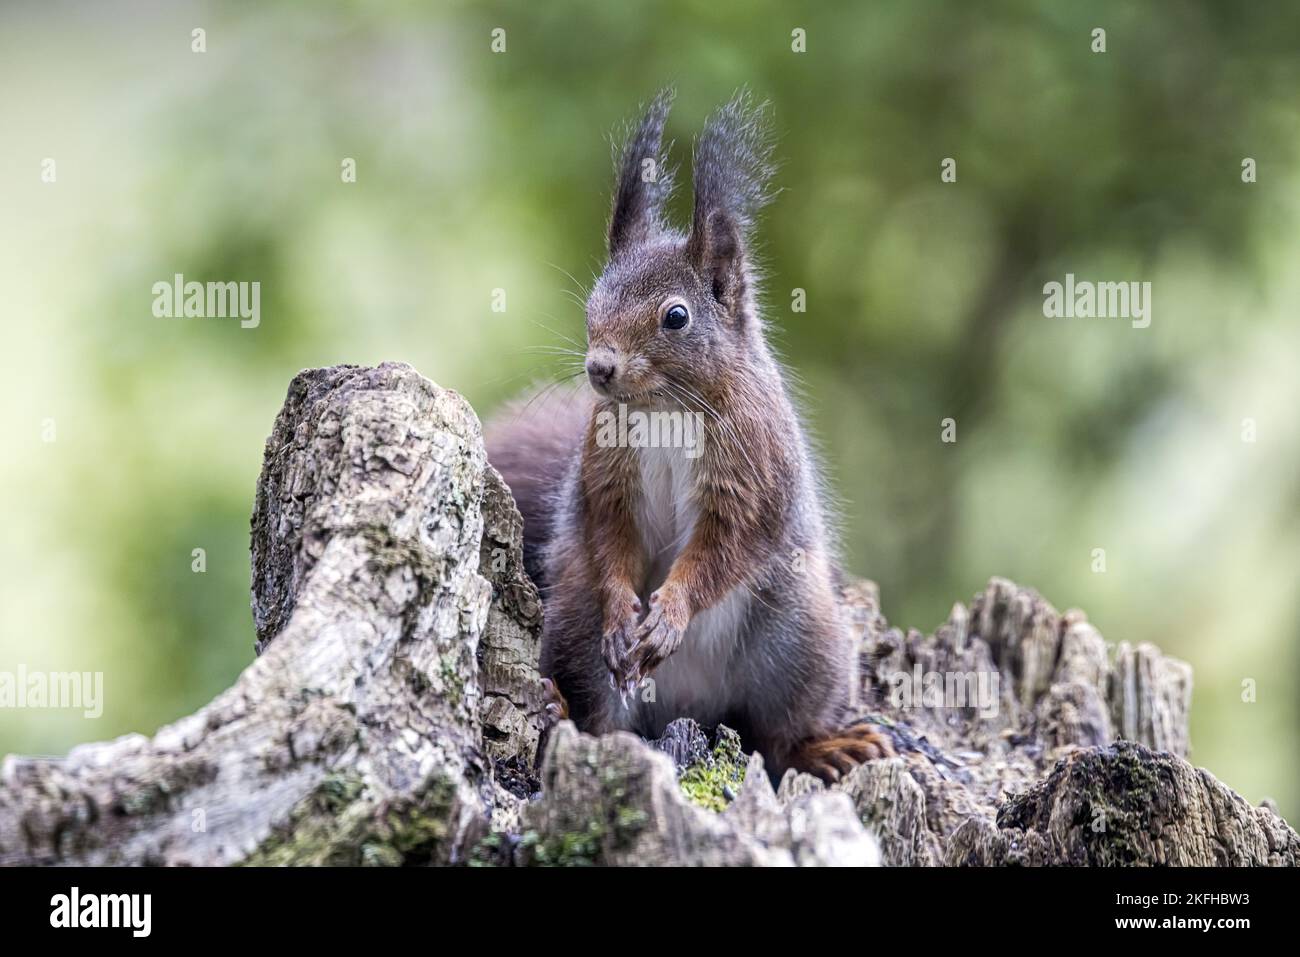 Squirrel sitting on tree stump Stock Photo